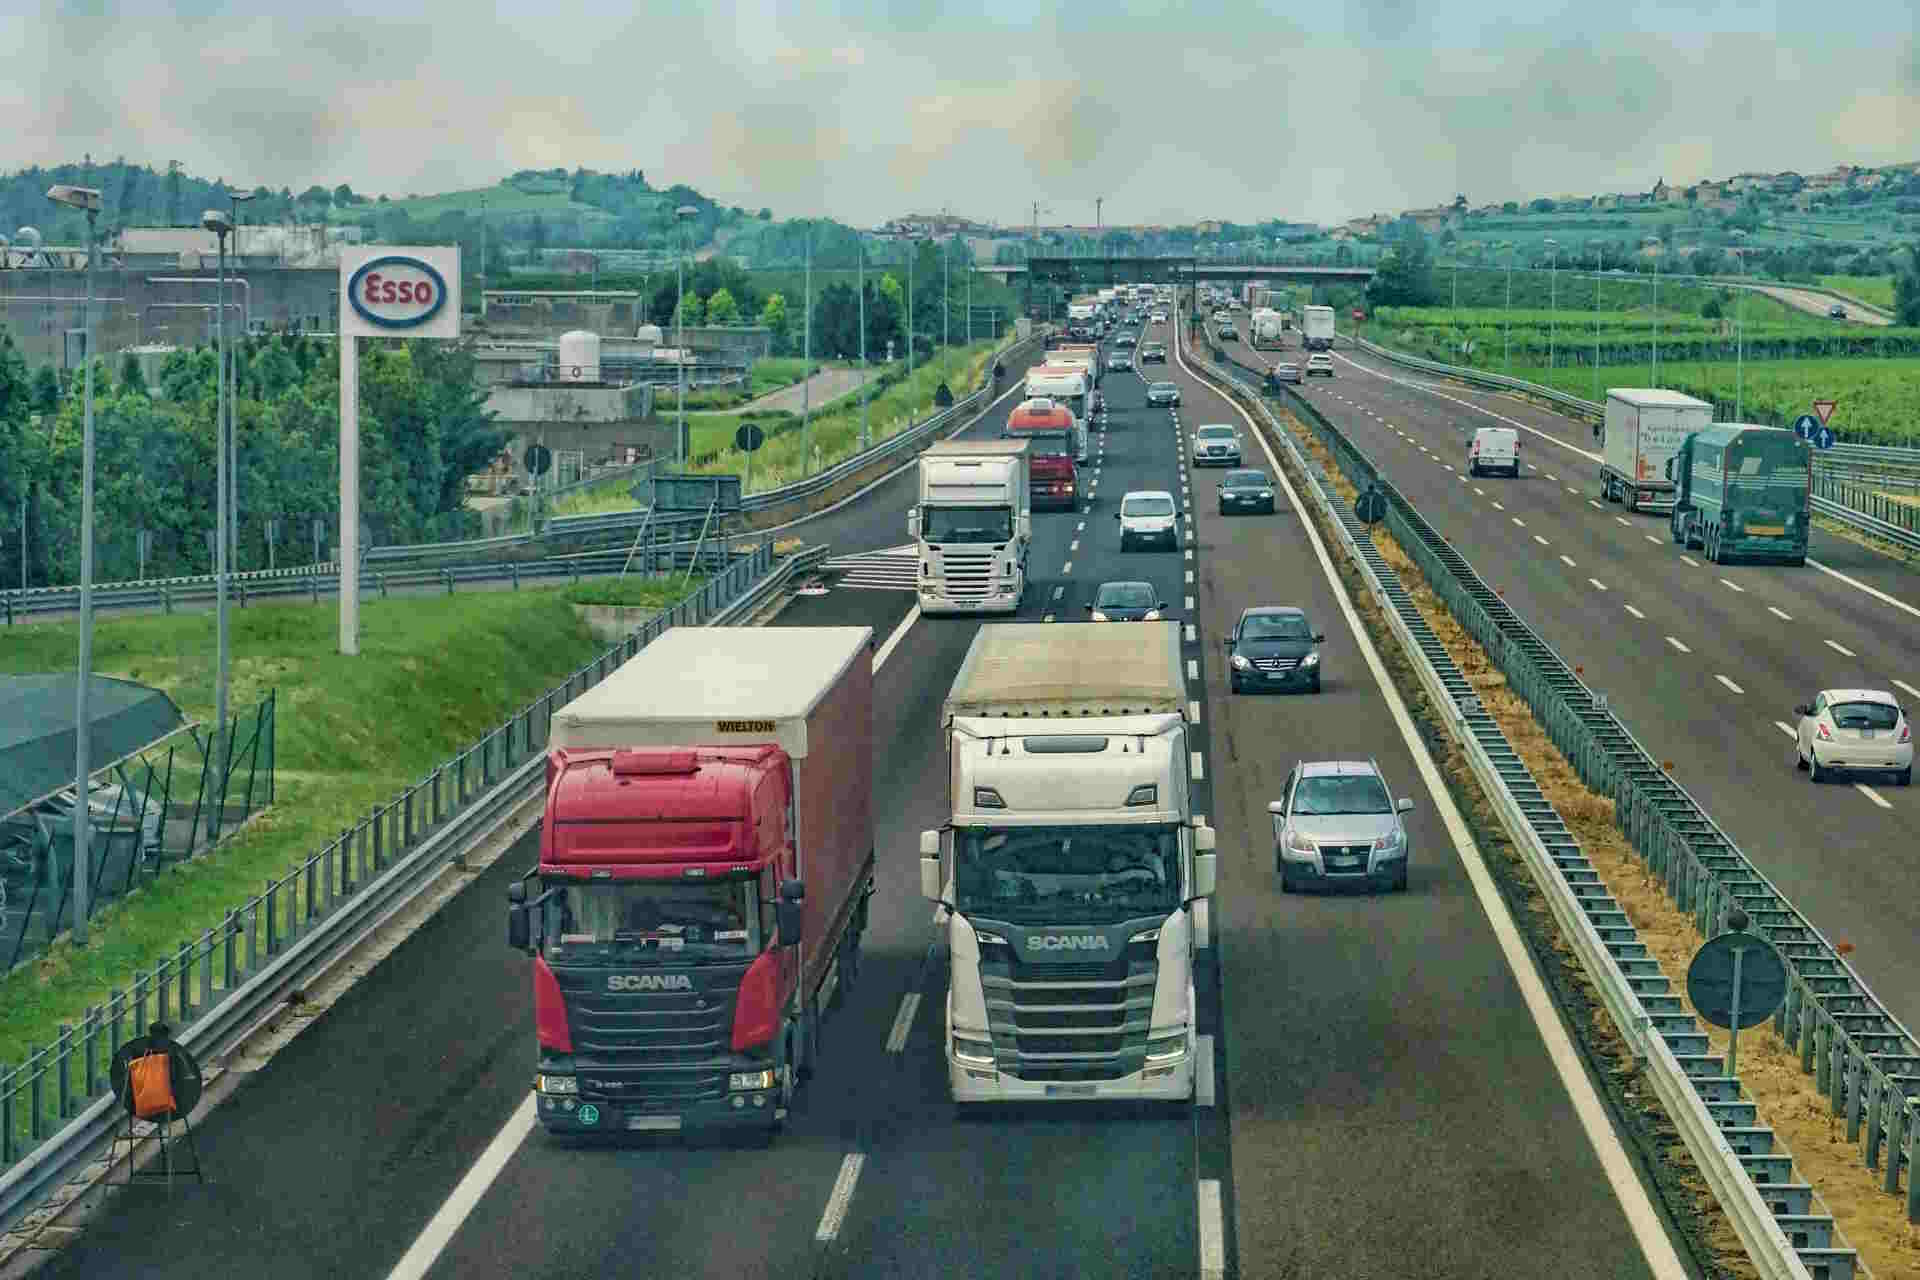 Controlli sui camion: dal 19 al 25 febbraio verifiche aumentate per l’operazione RoadPol Truck & Bus